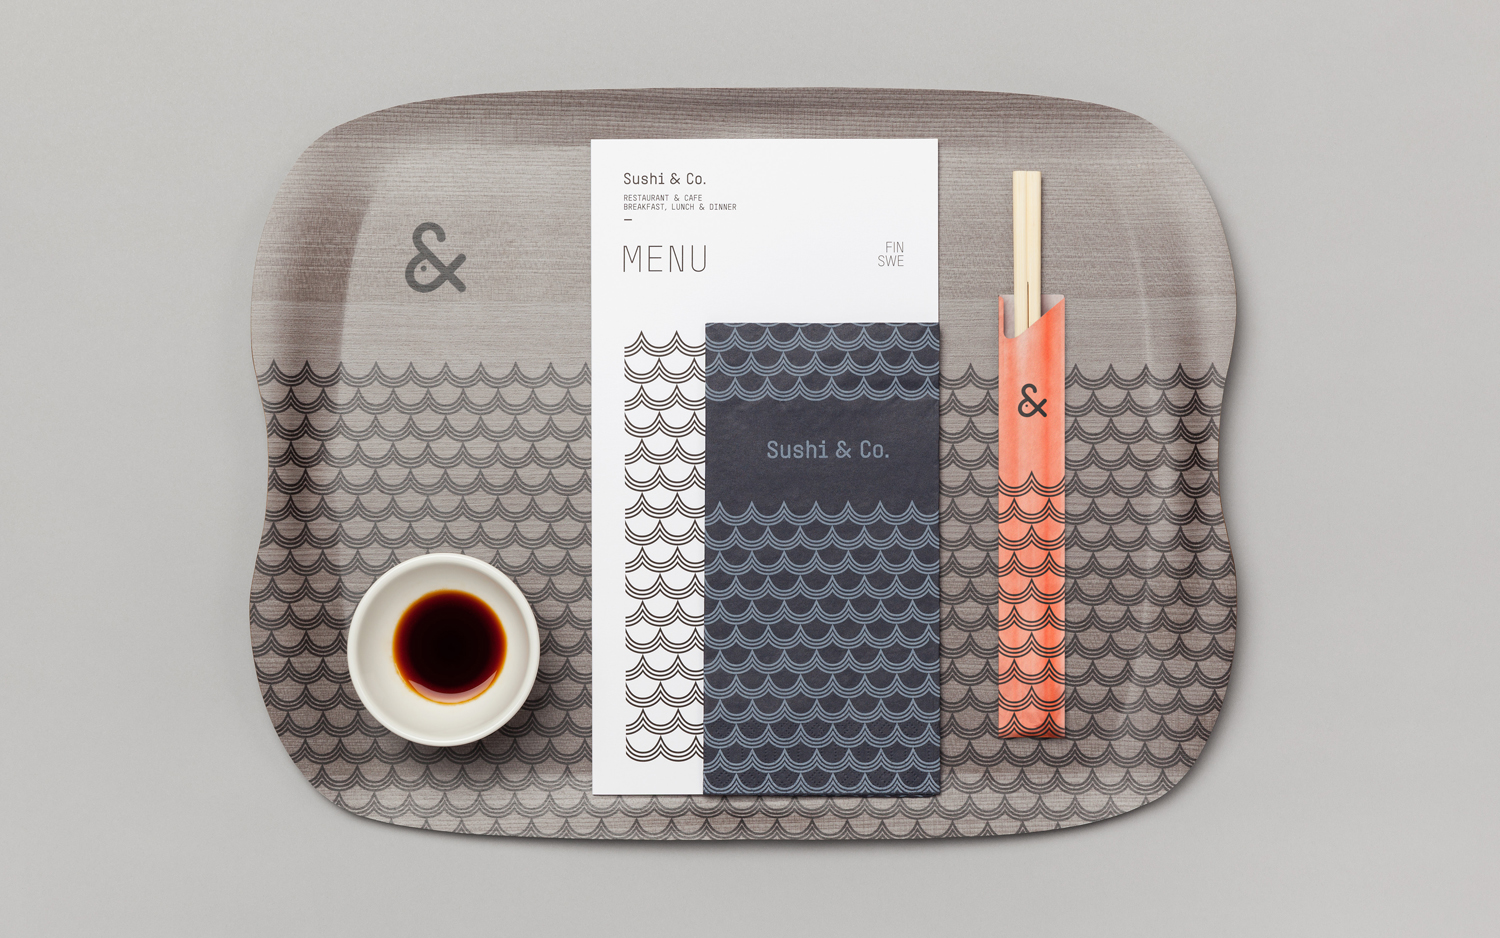 Visual identity, menus and napkin for Baltic Sea cruise ship restaurant Sushi & Co. designed by Bond